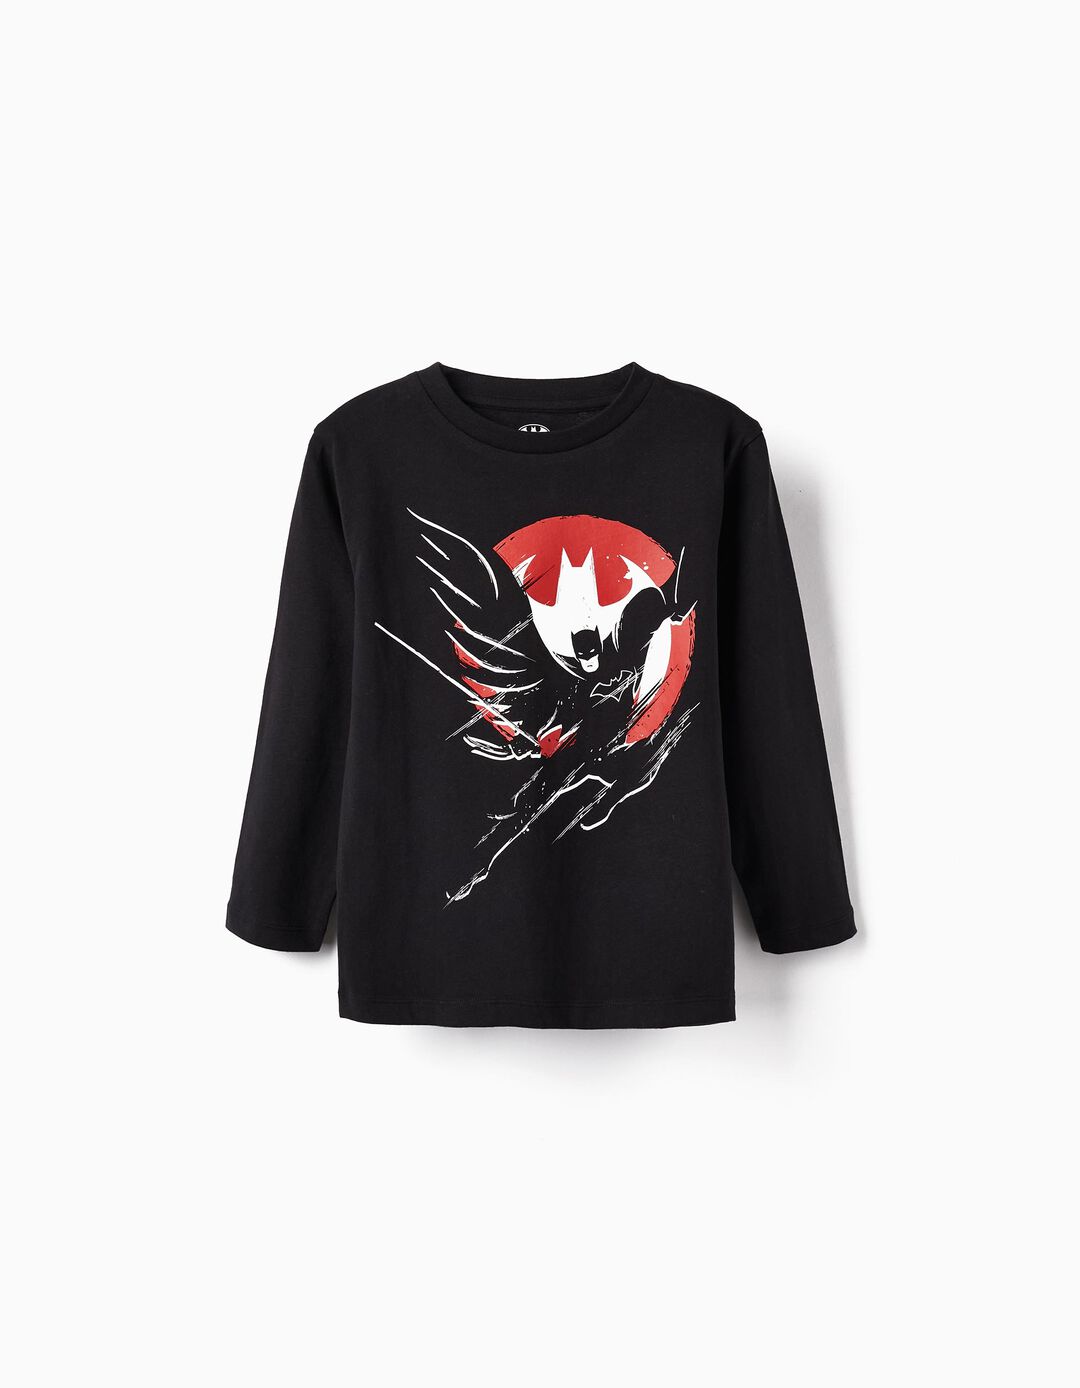 Camiseta de Algodón para Niño 'Batman', Negro